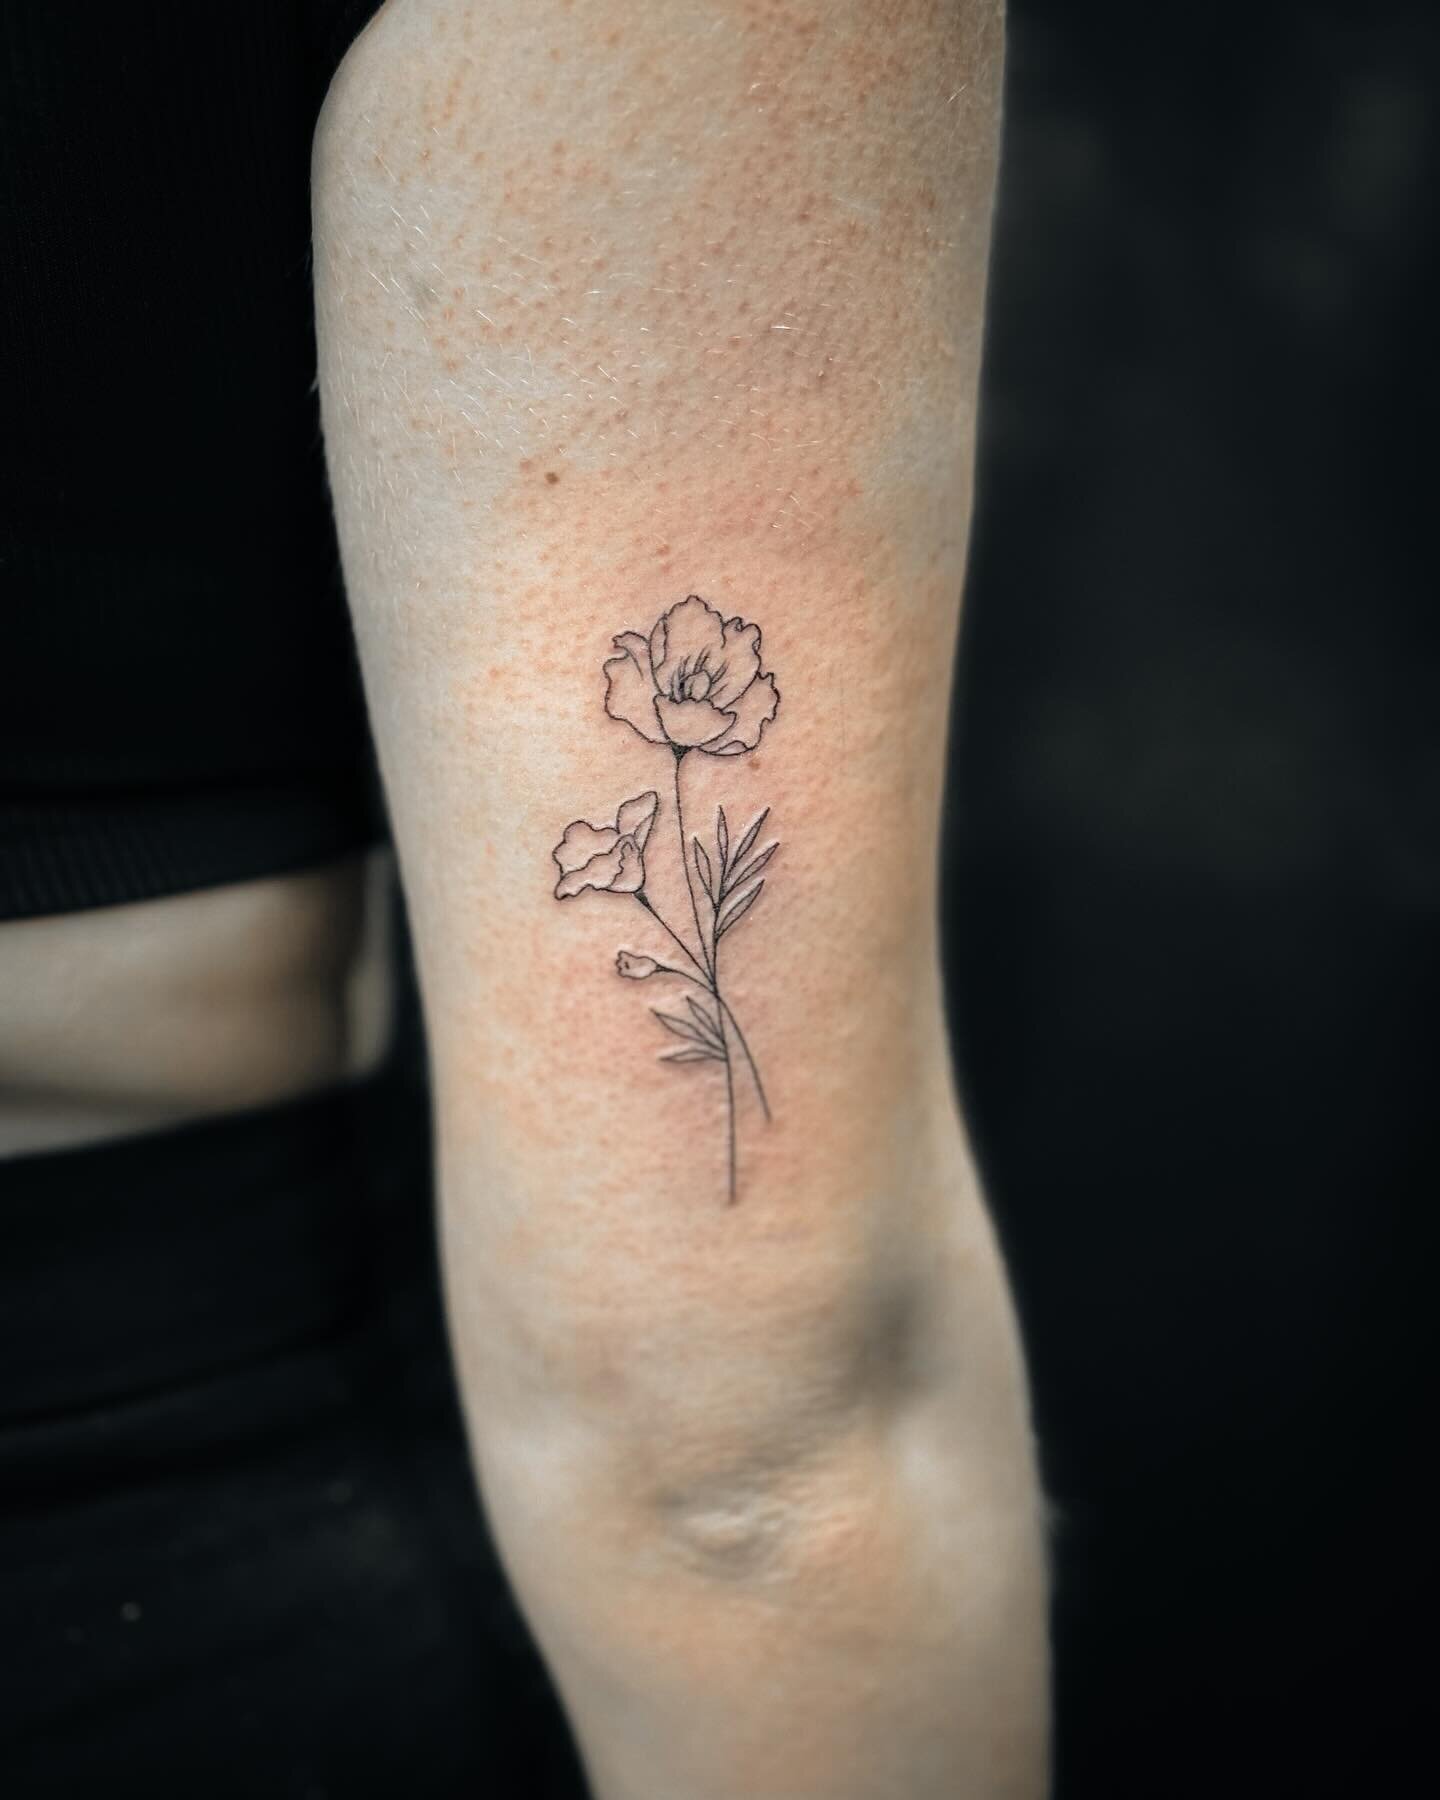 Flower 🌹 
.
.
.
#tattoo #tattoos #tattooideas #birsfelden #basel #studio #switzerland #tattooforwoman #armtattoo #flowertattoo